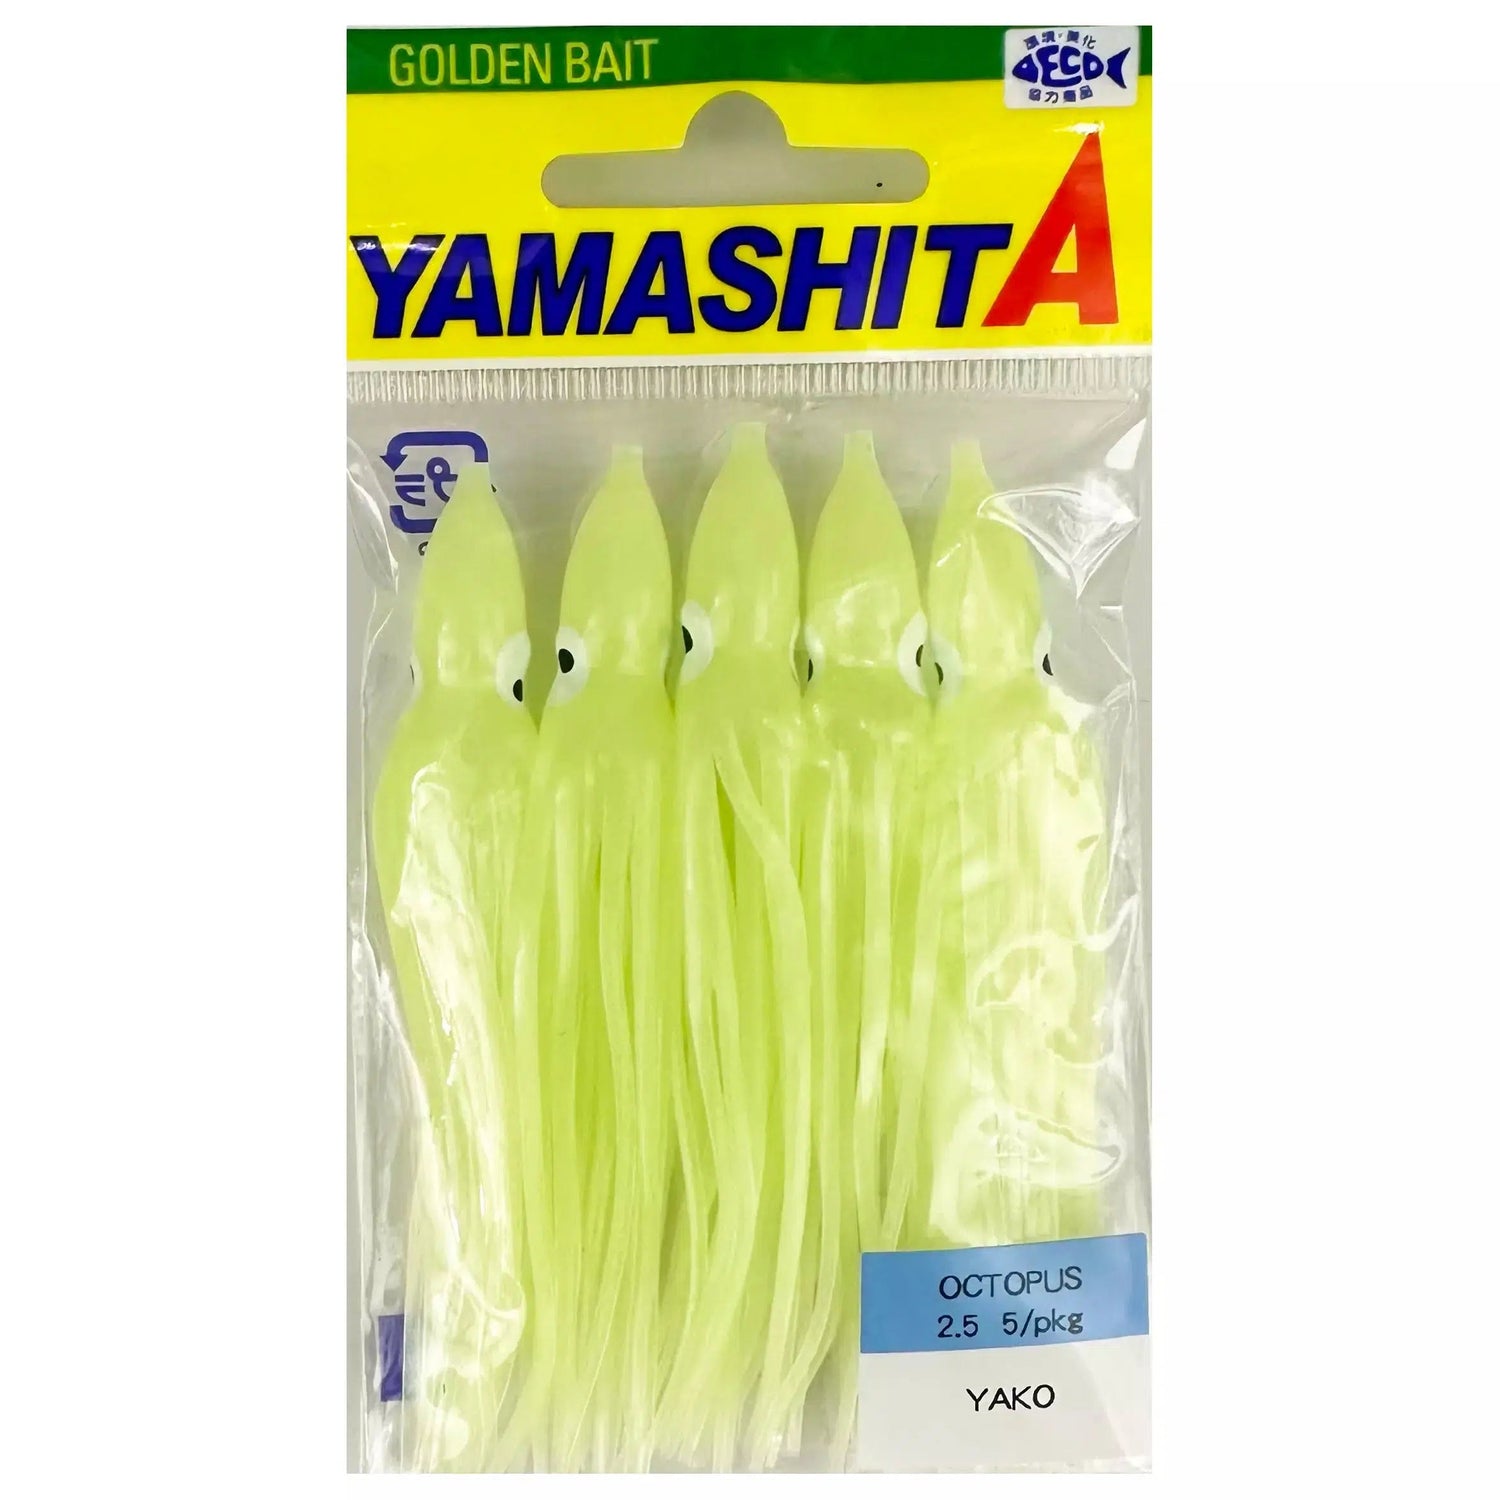 Yamashita Golden Bait Skirt (5 per pack) BB-Skirt-Yamashita-1.5-Yako-Fishing Station